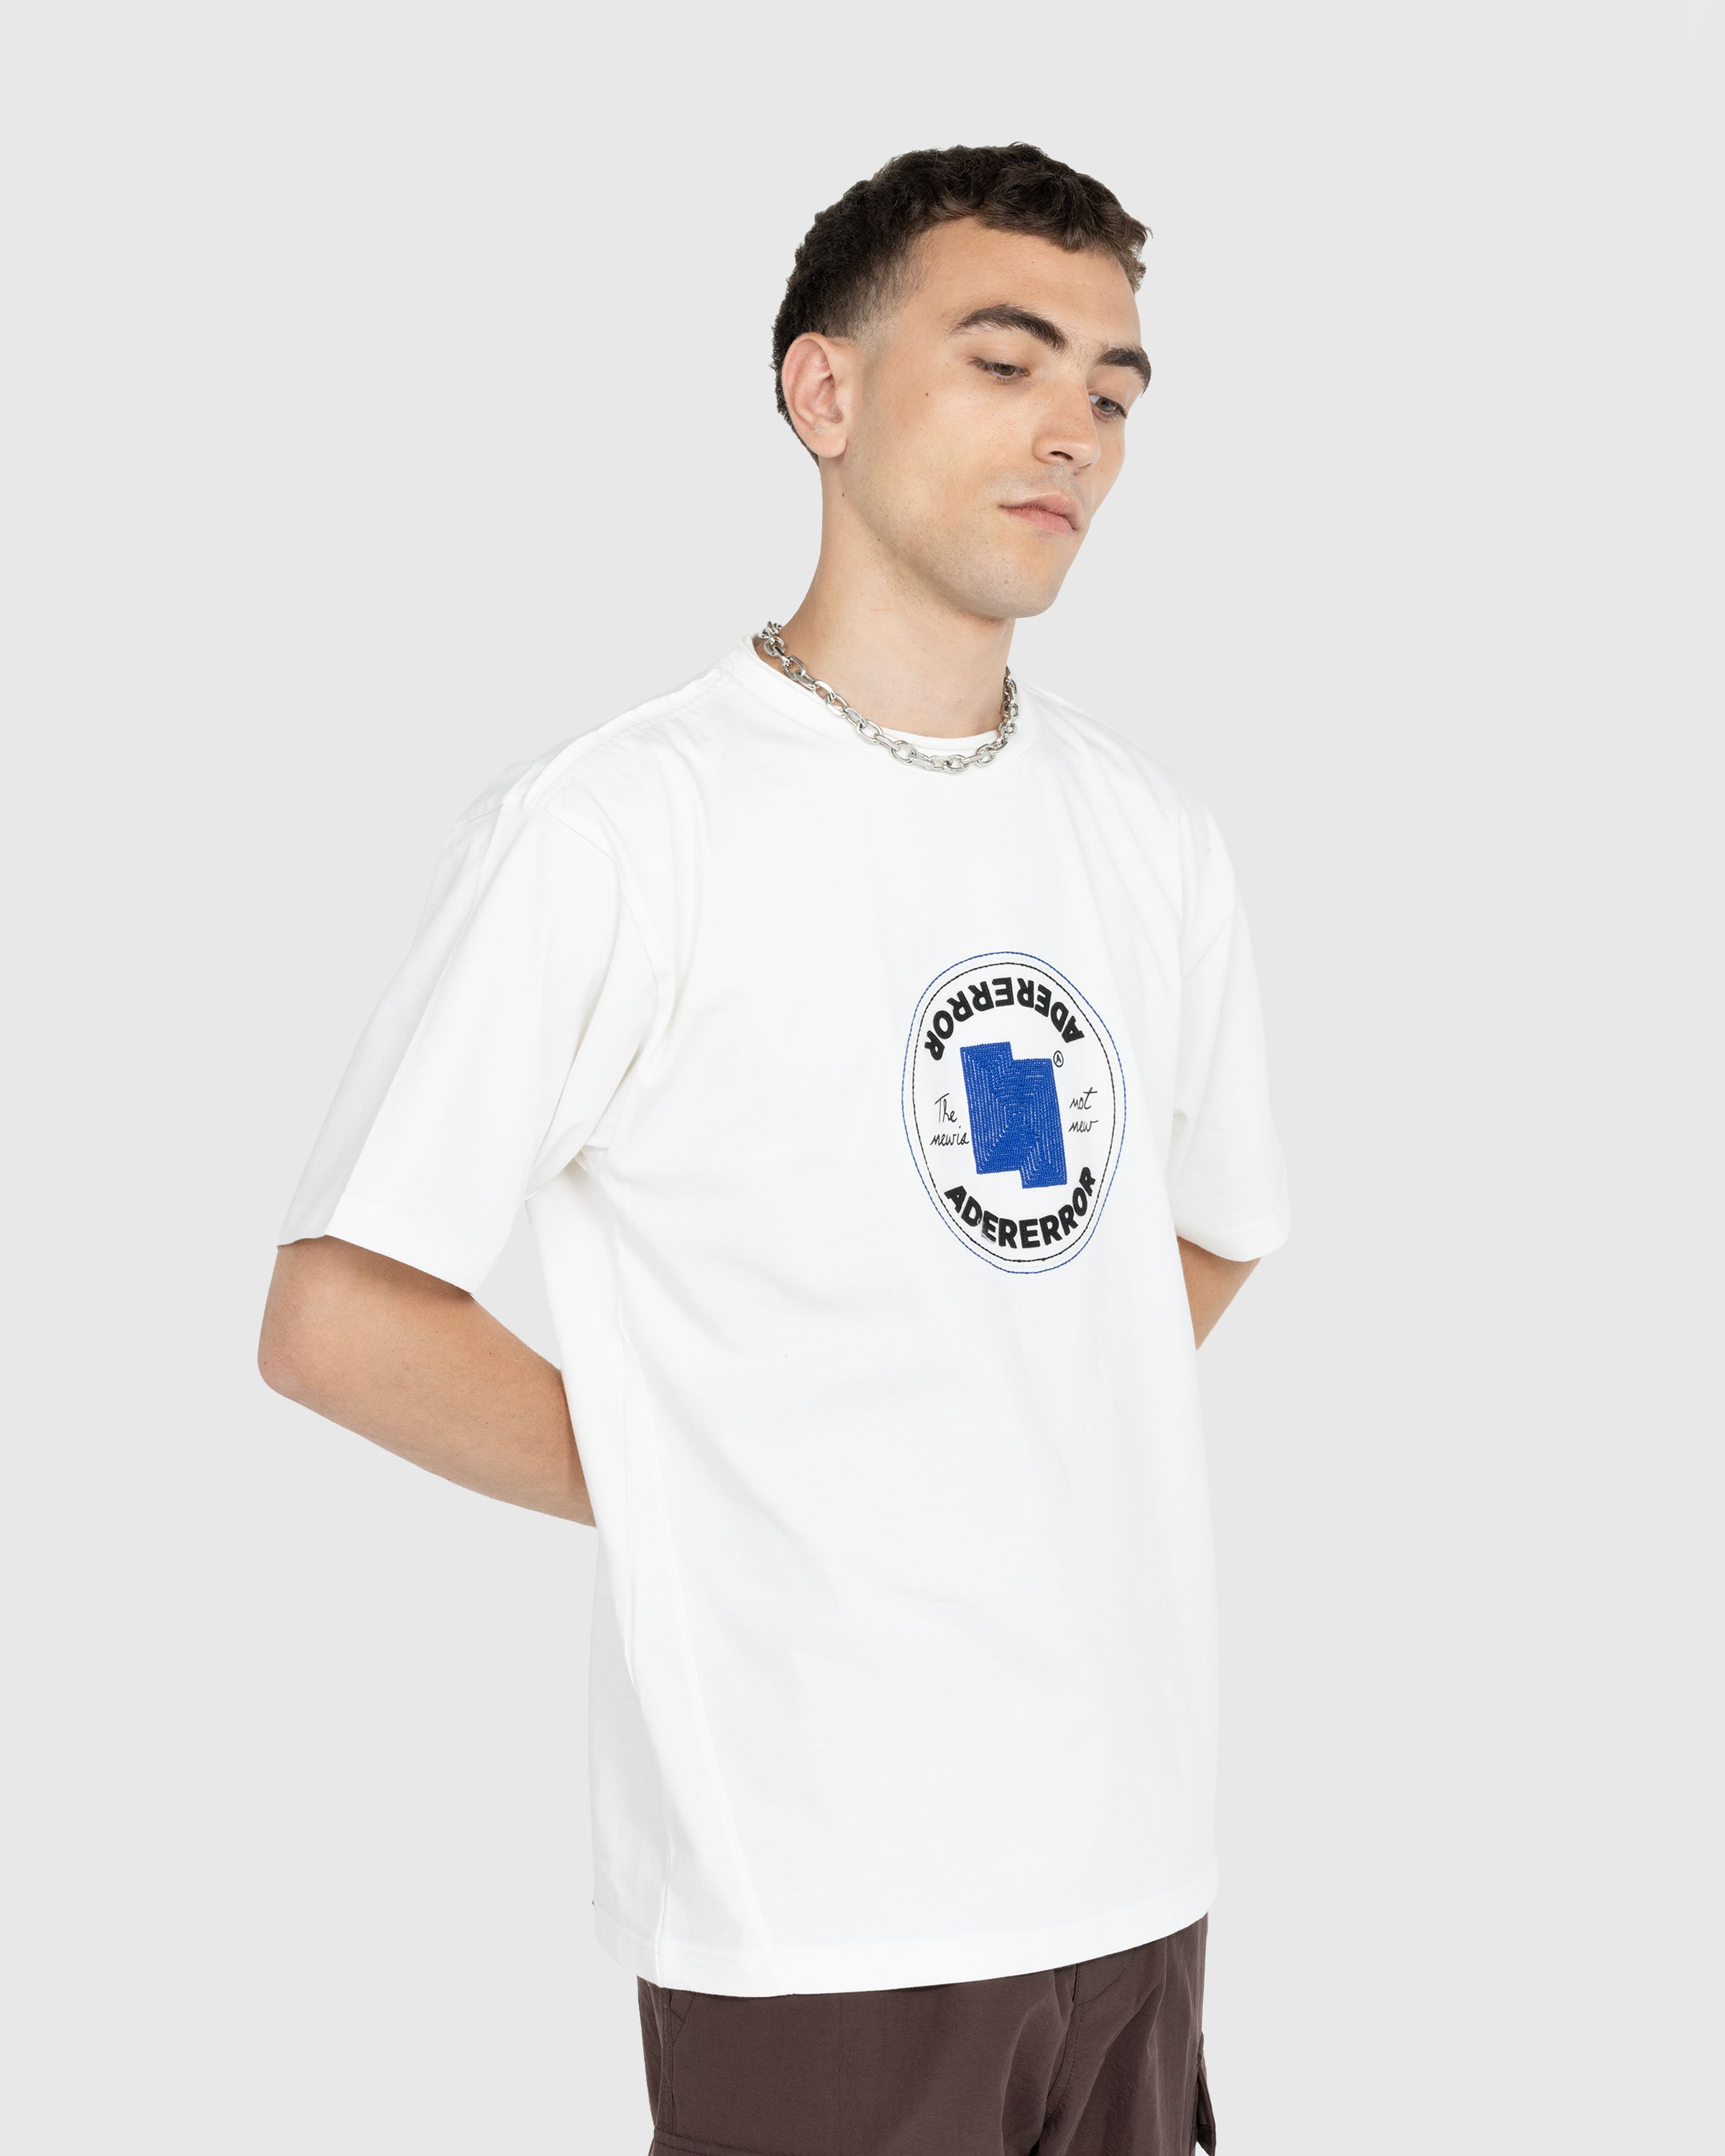 Converse x Ader Error - Shapes T-Shirt Cloud Dancer - Clothing - White - Image 2